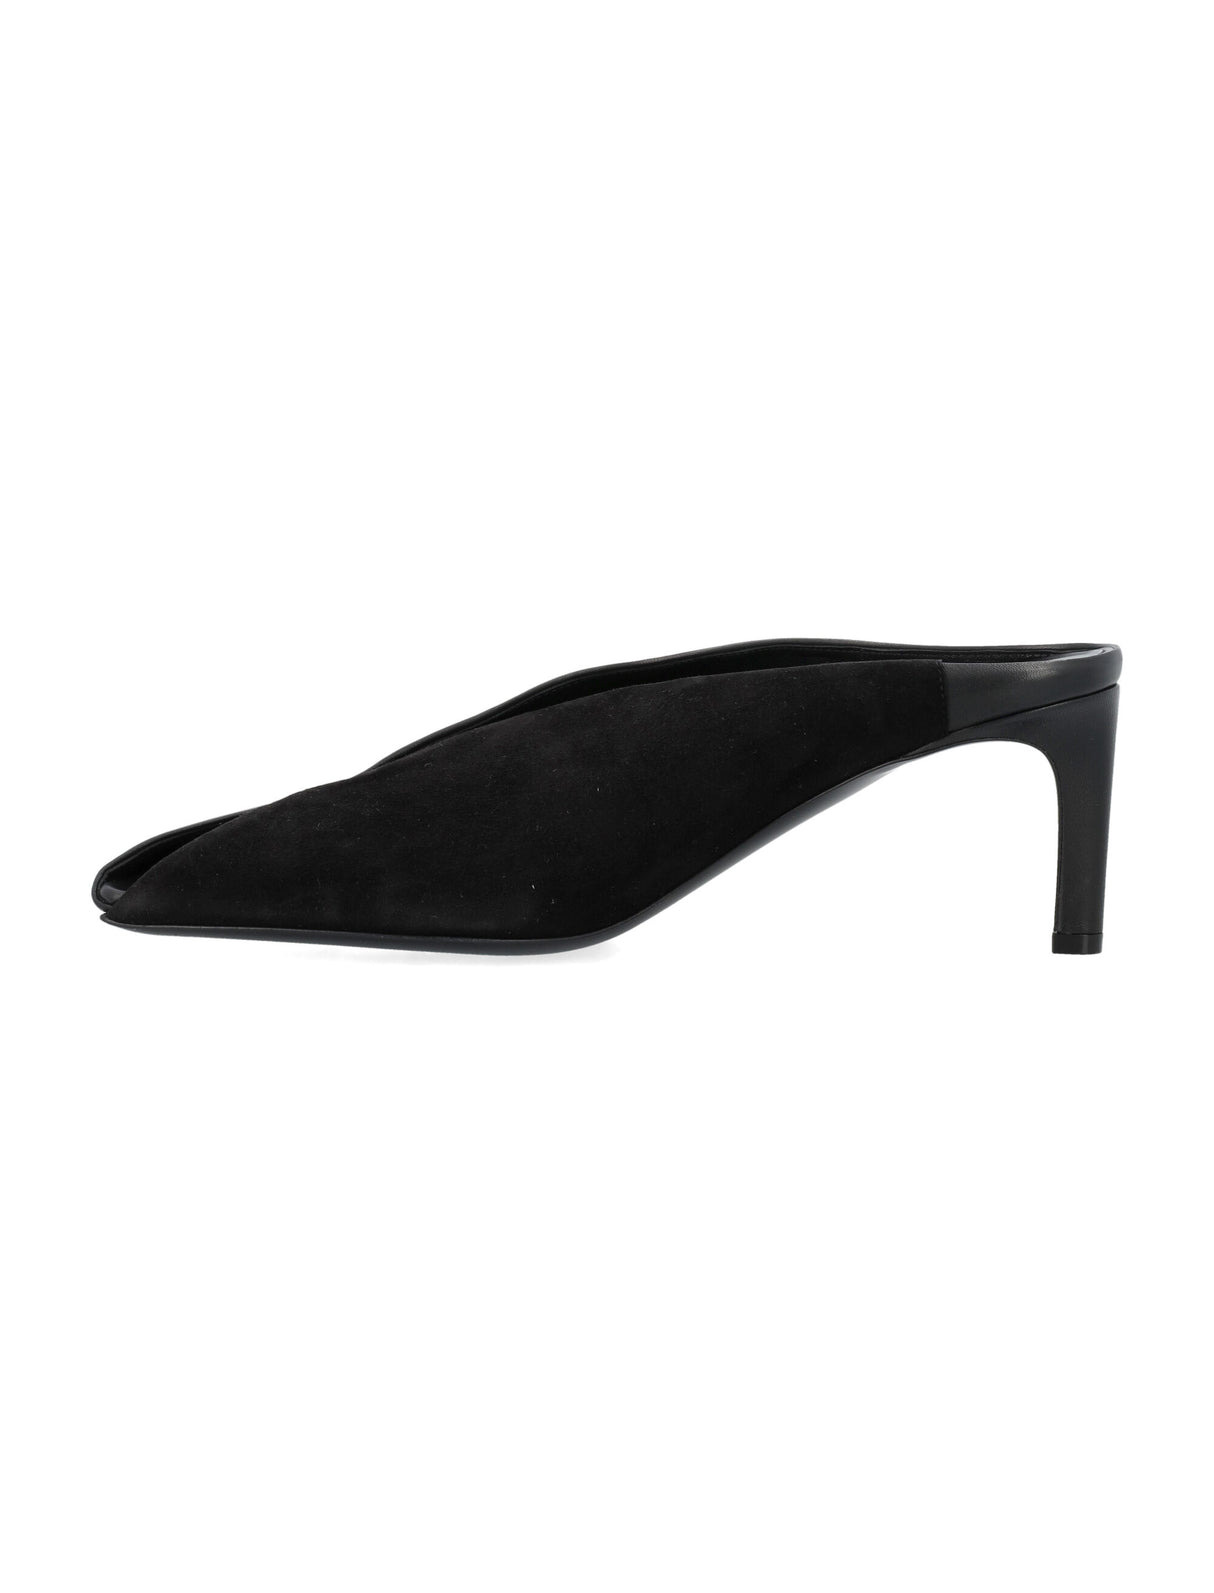 JIL SANDER High-Heeled Leather Flat for Women - Squared Toe, Nappa Lining, 7.5cm Heel Height